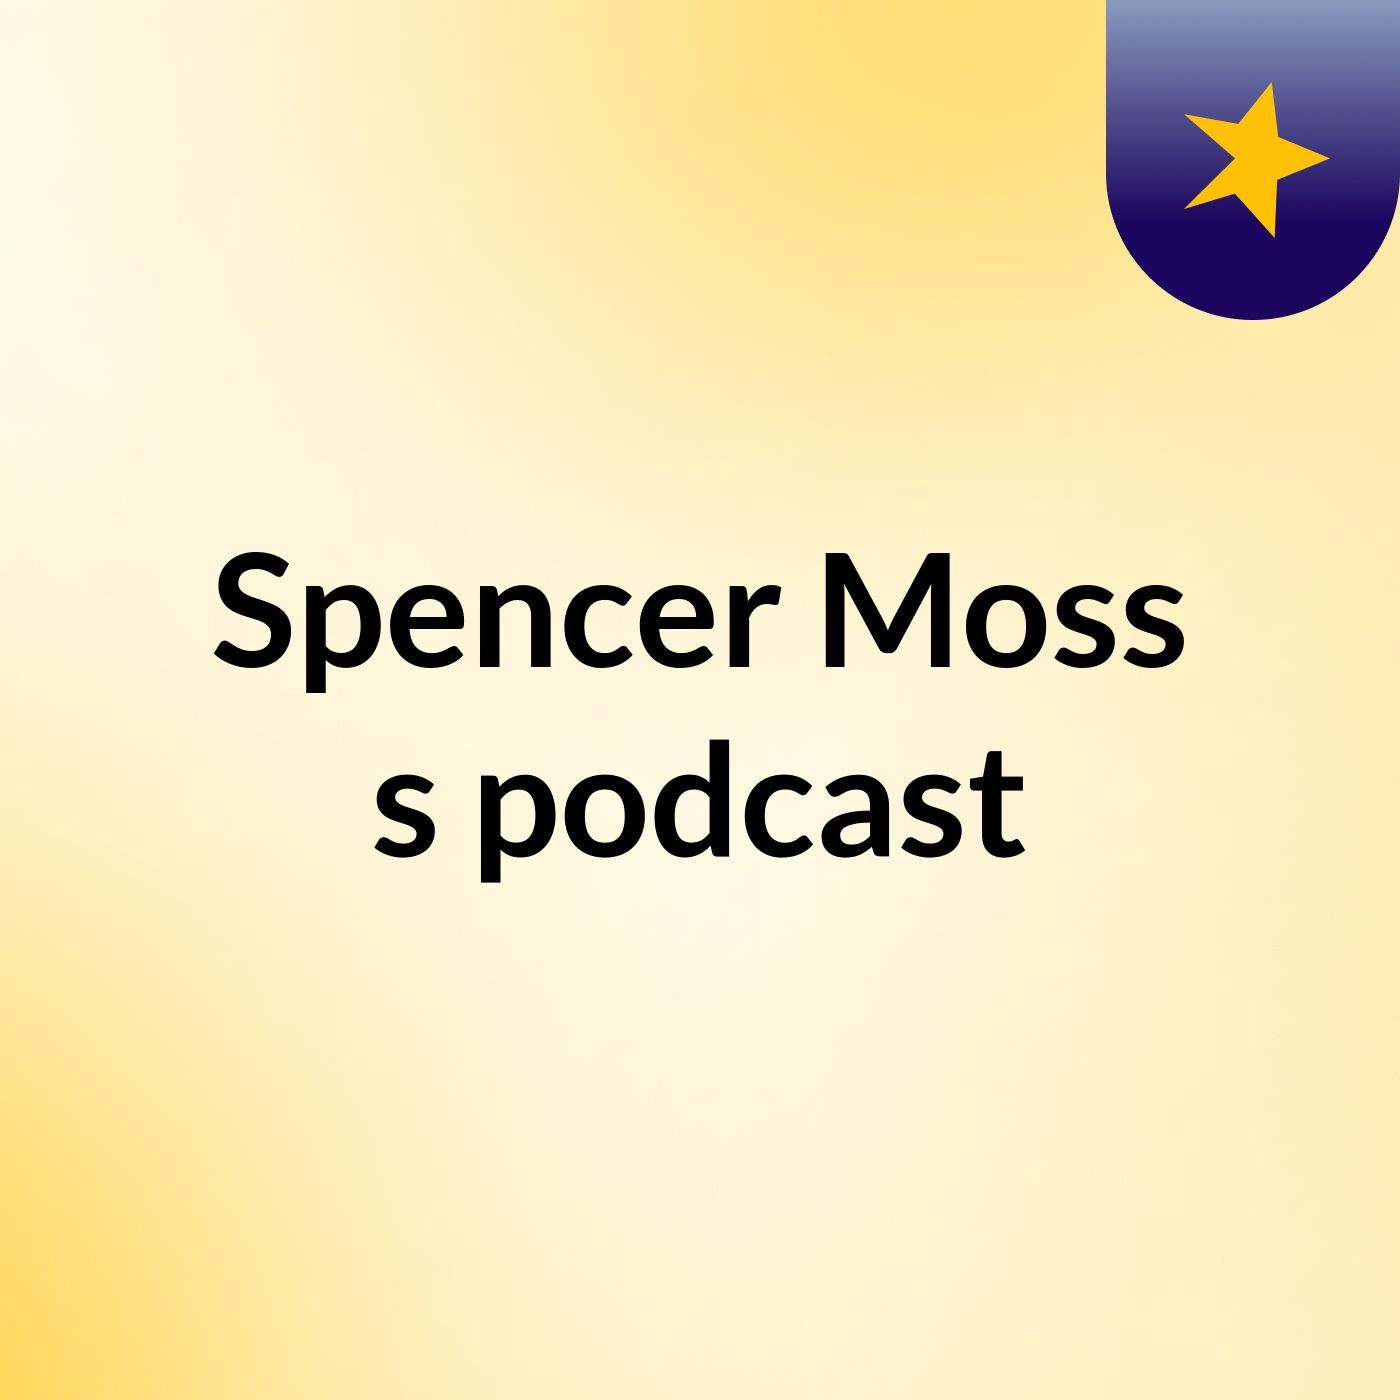 Spencer Moss's podcast